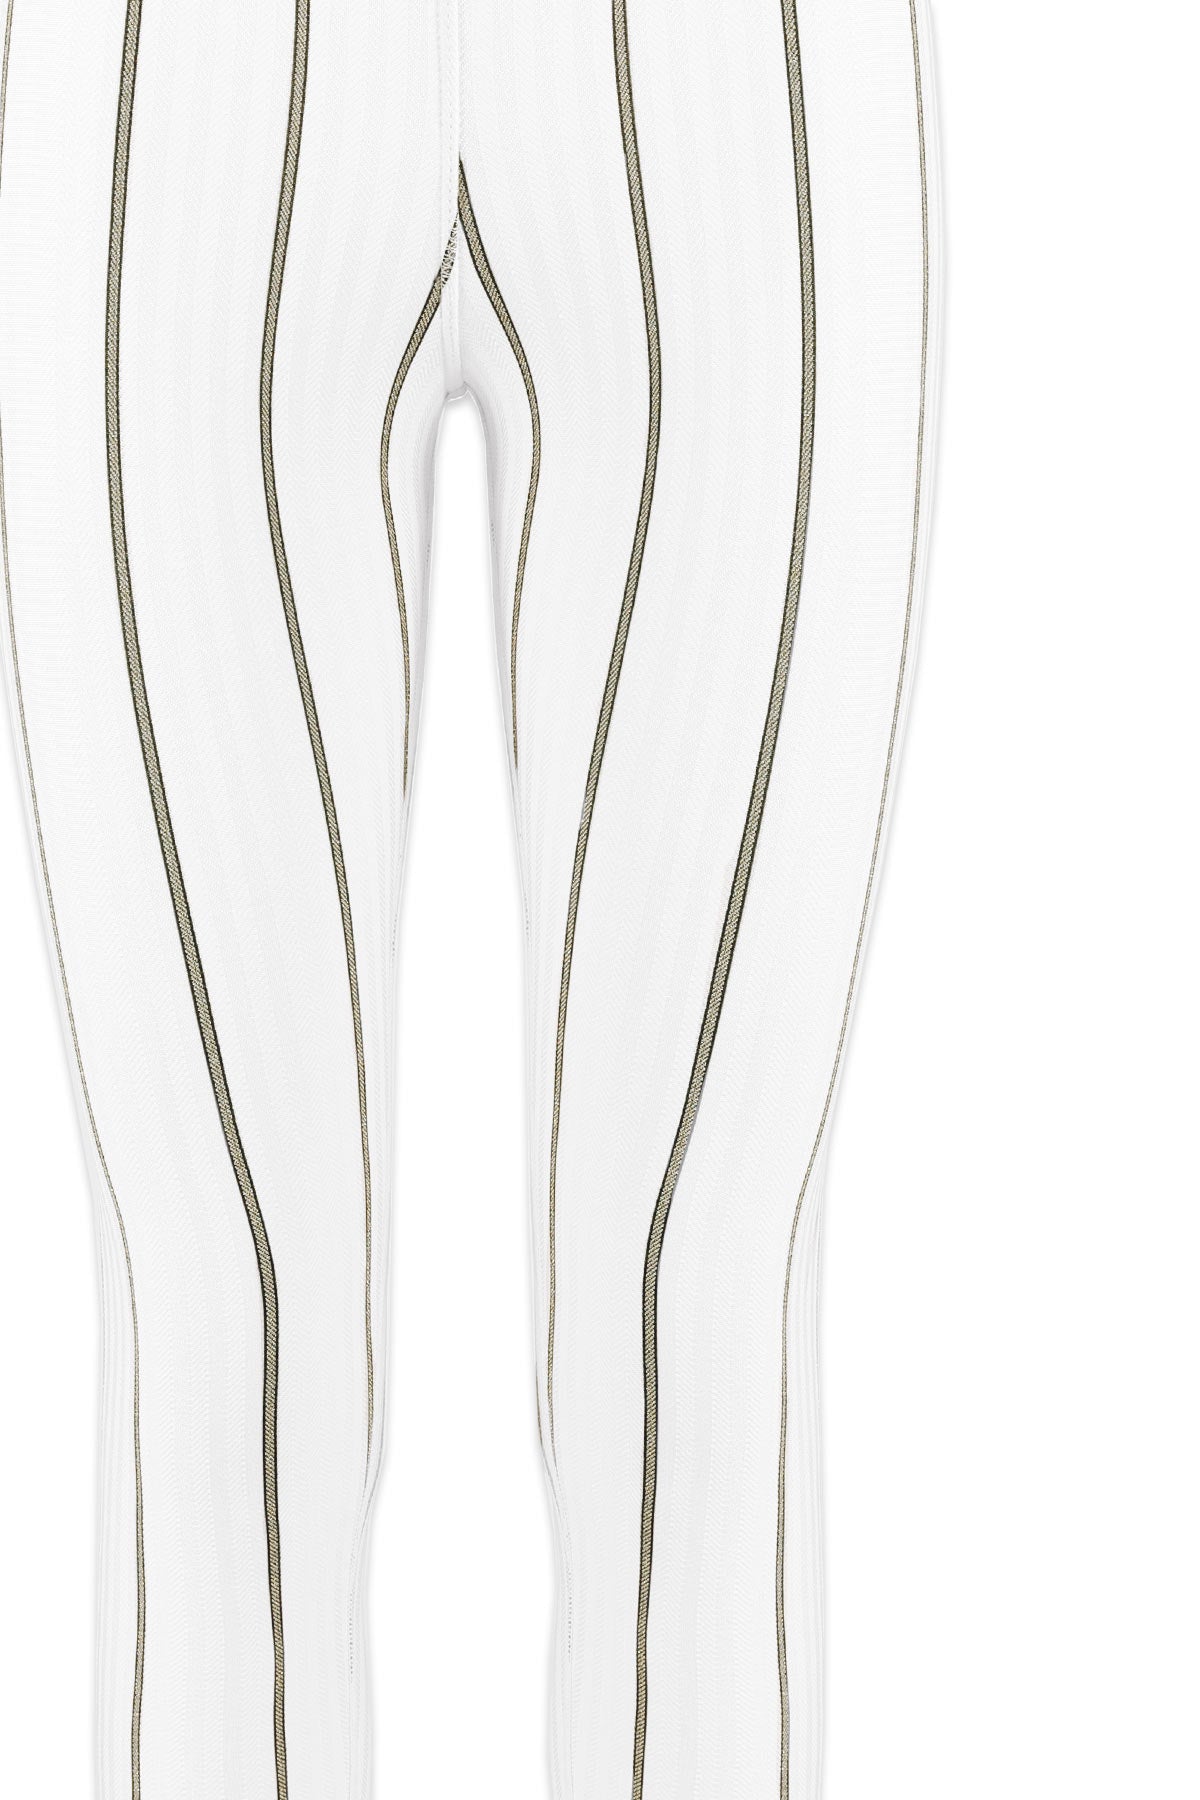 lunar white and white color horizontal striped leggings